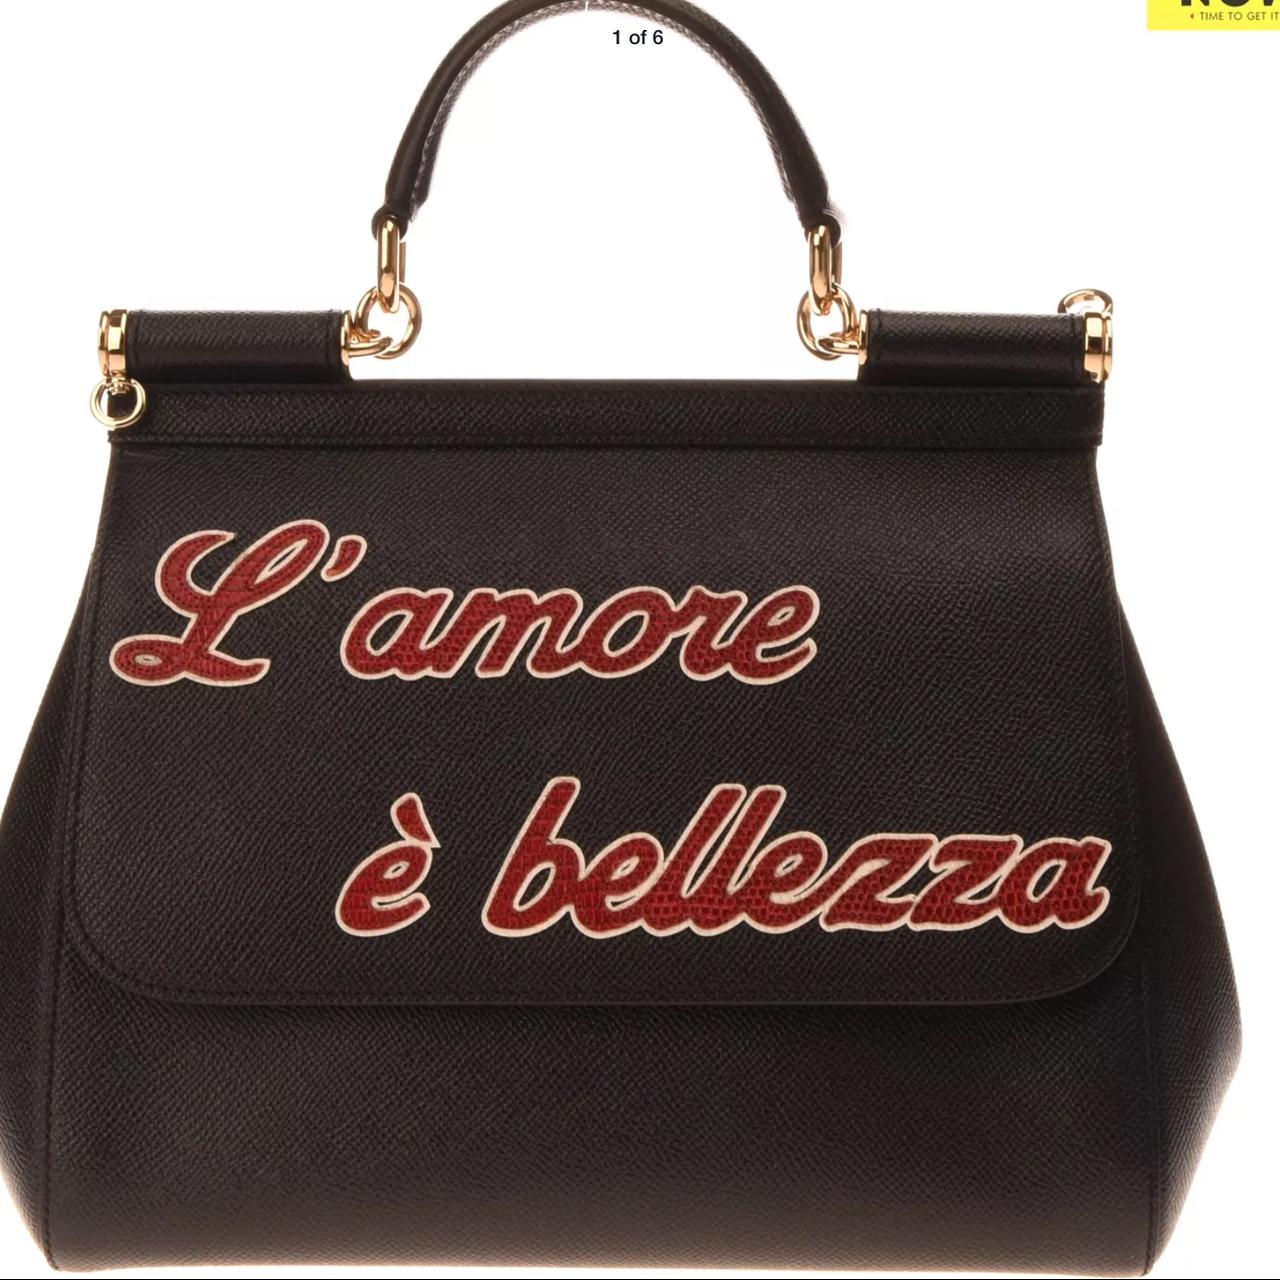 Dolce & Gabbana Sicily large handbag, in vibrant - Depop